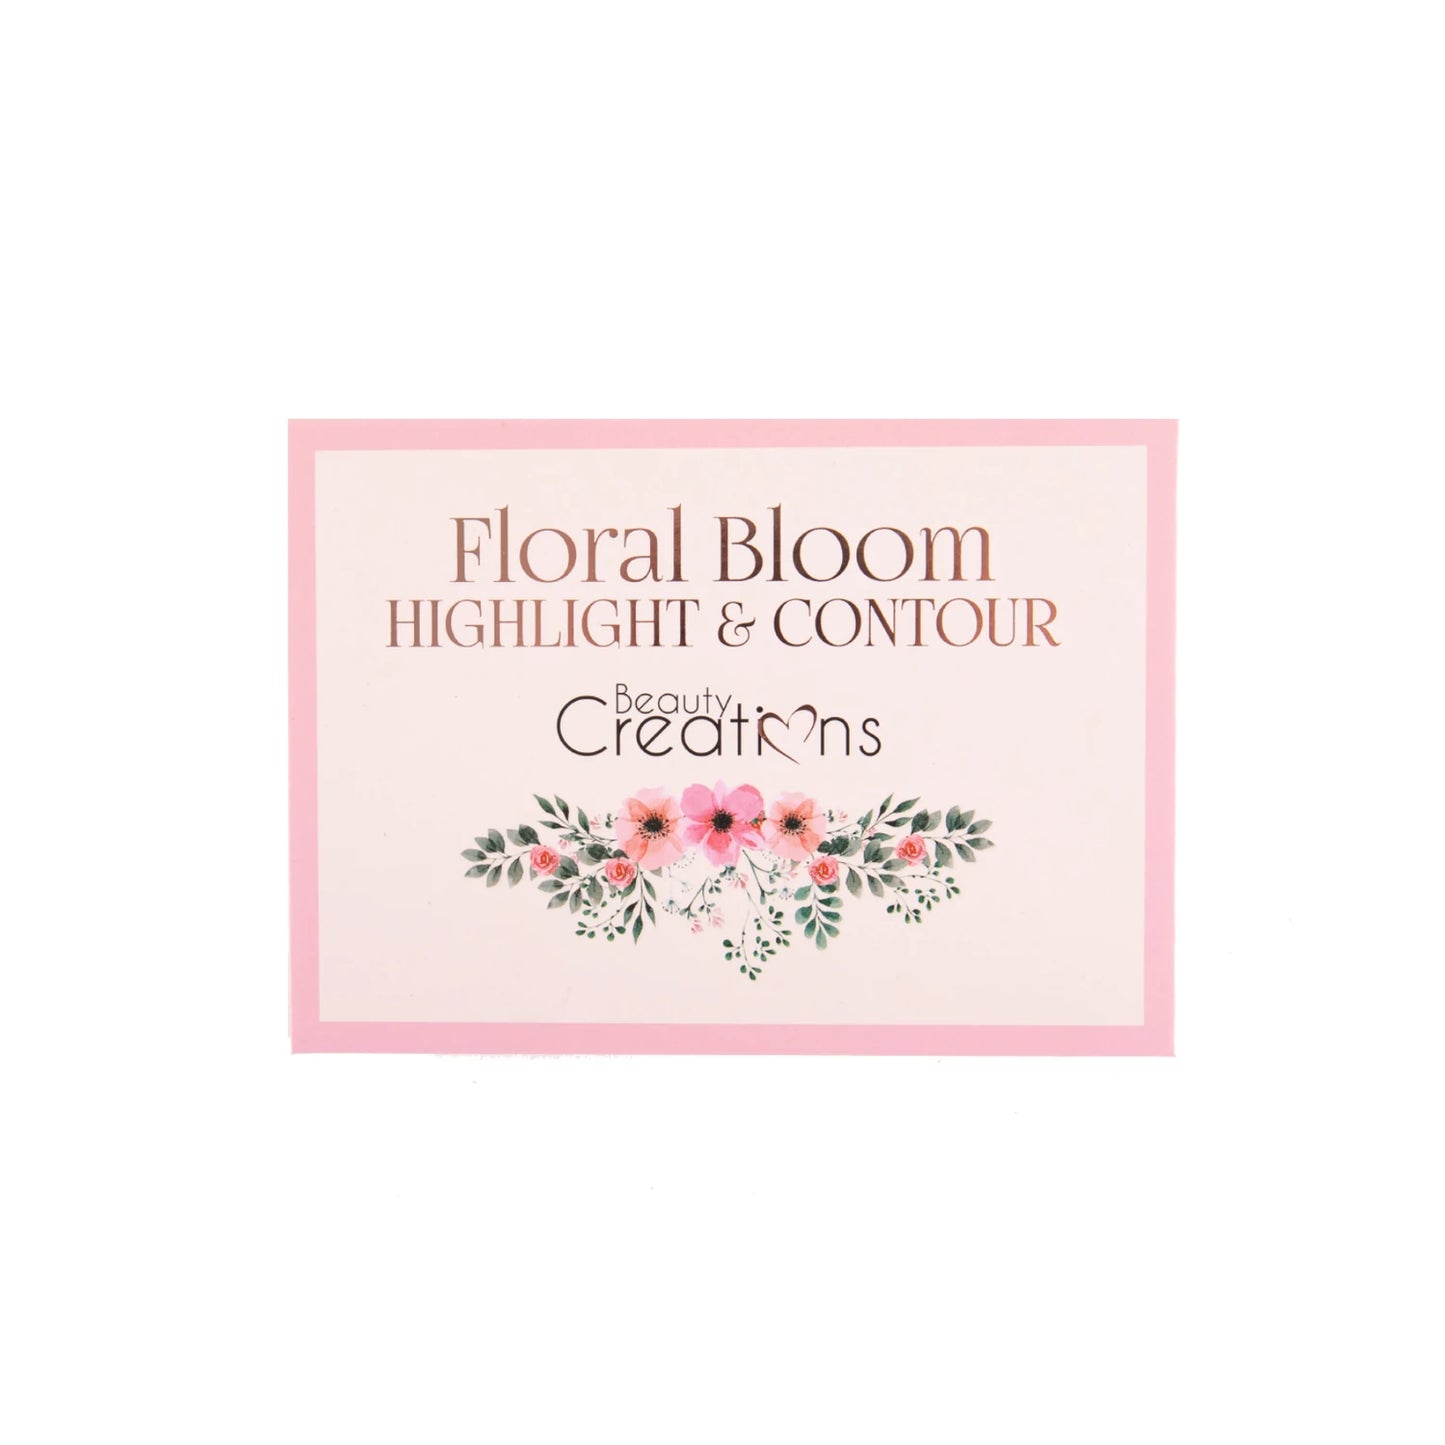 Floral Bloom Highlight & Contour